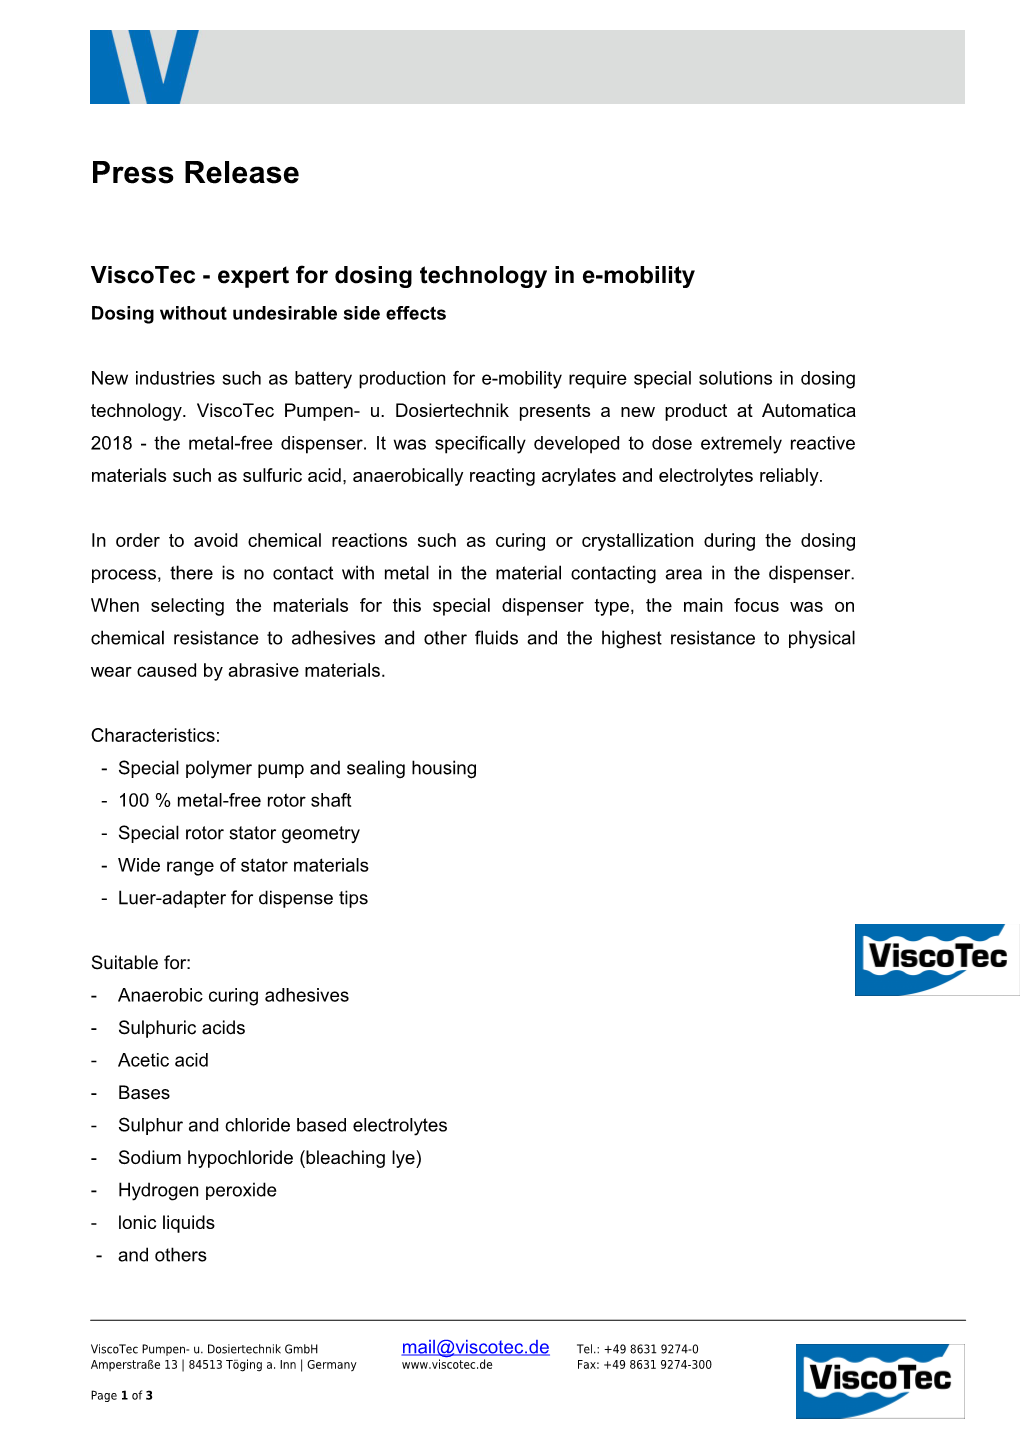 Viscotec - Expert for Dosing Technology in E-Mobility